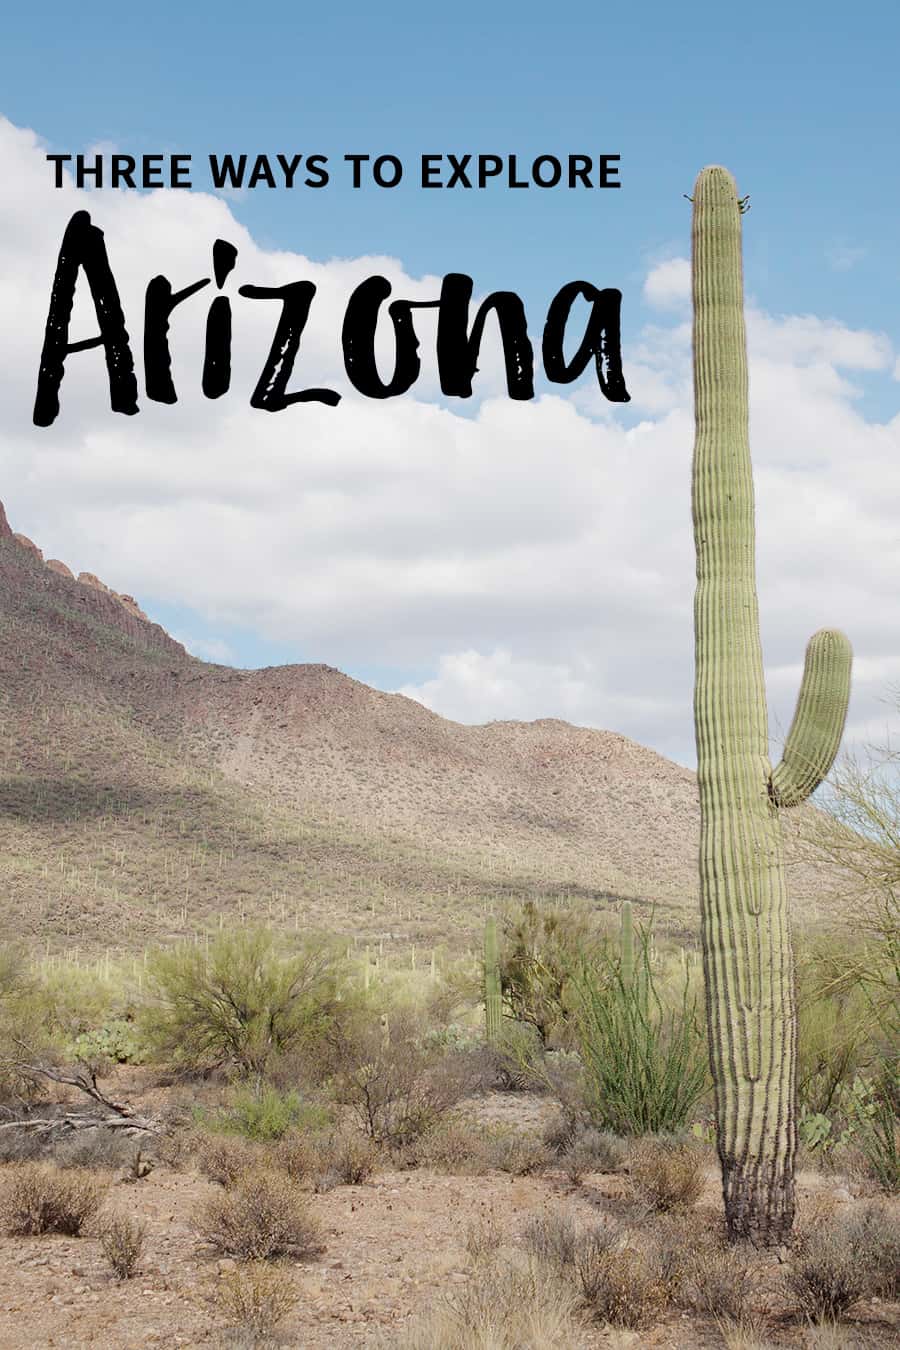 Three ways to explore Arizona: where to go on day trips, where to visit, what to see, where to hike, in Arizona.